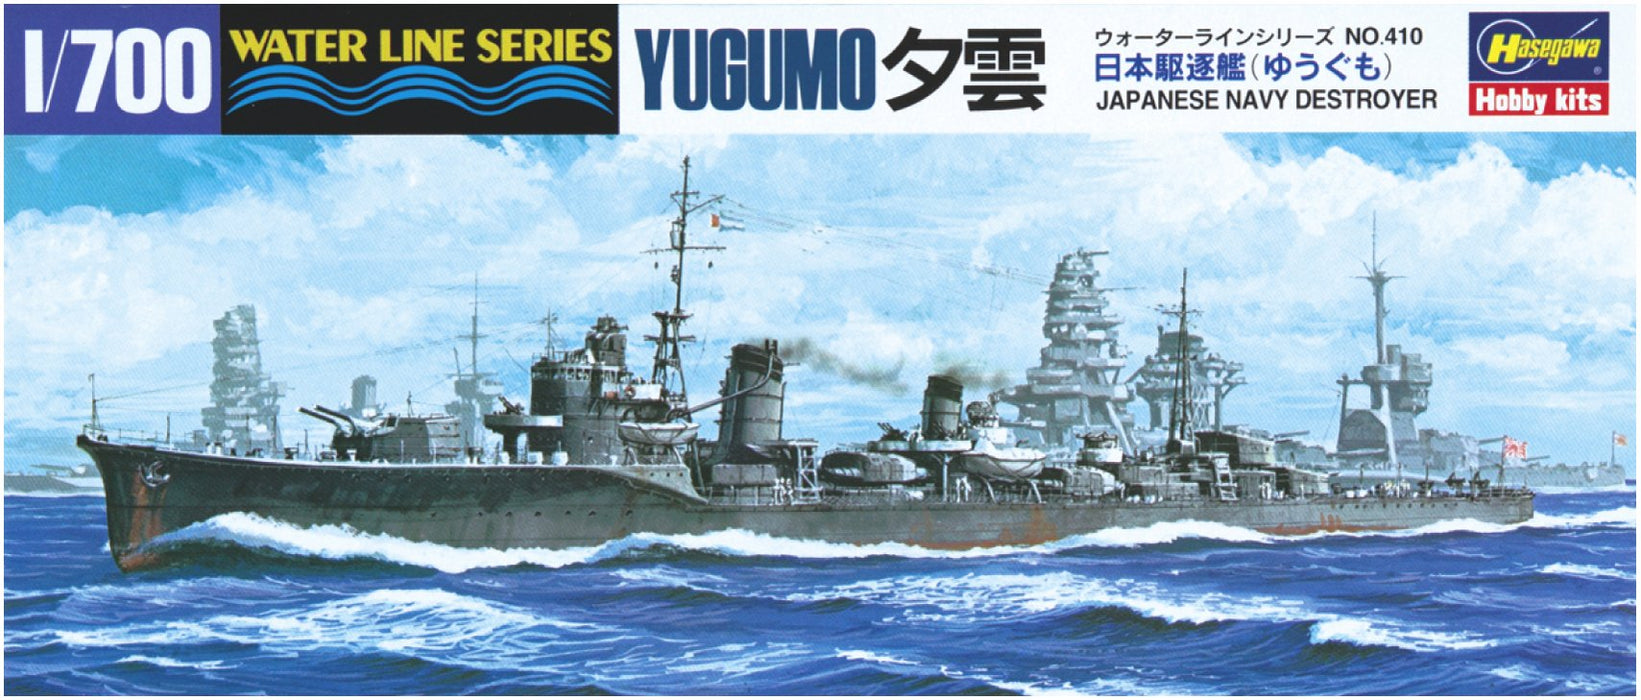 Hasegawa 1/700 Water Line Series Japanese Navy Destroyer Yugumo Plastic Model 410